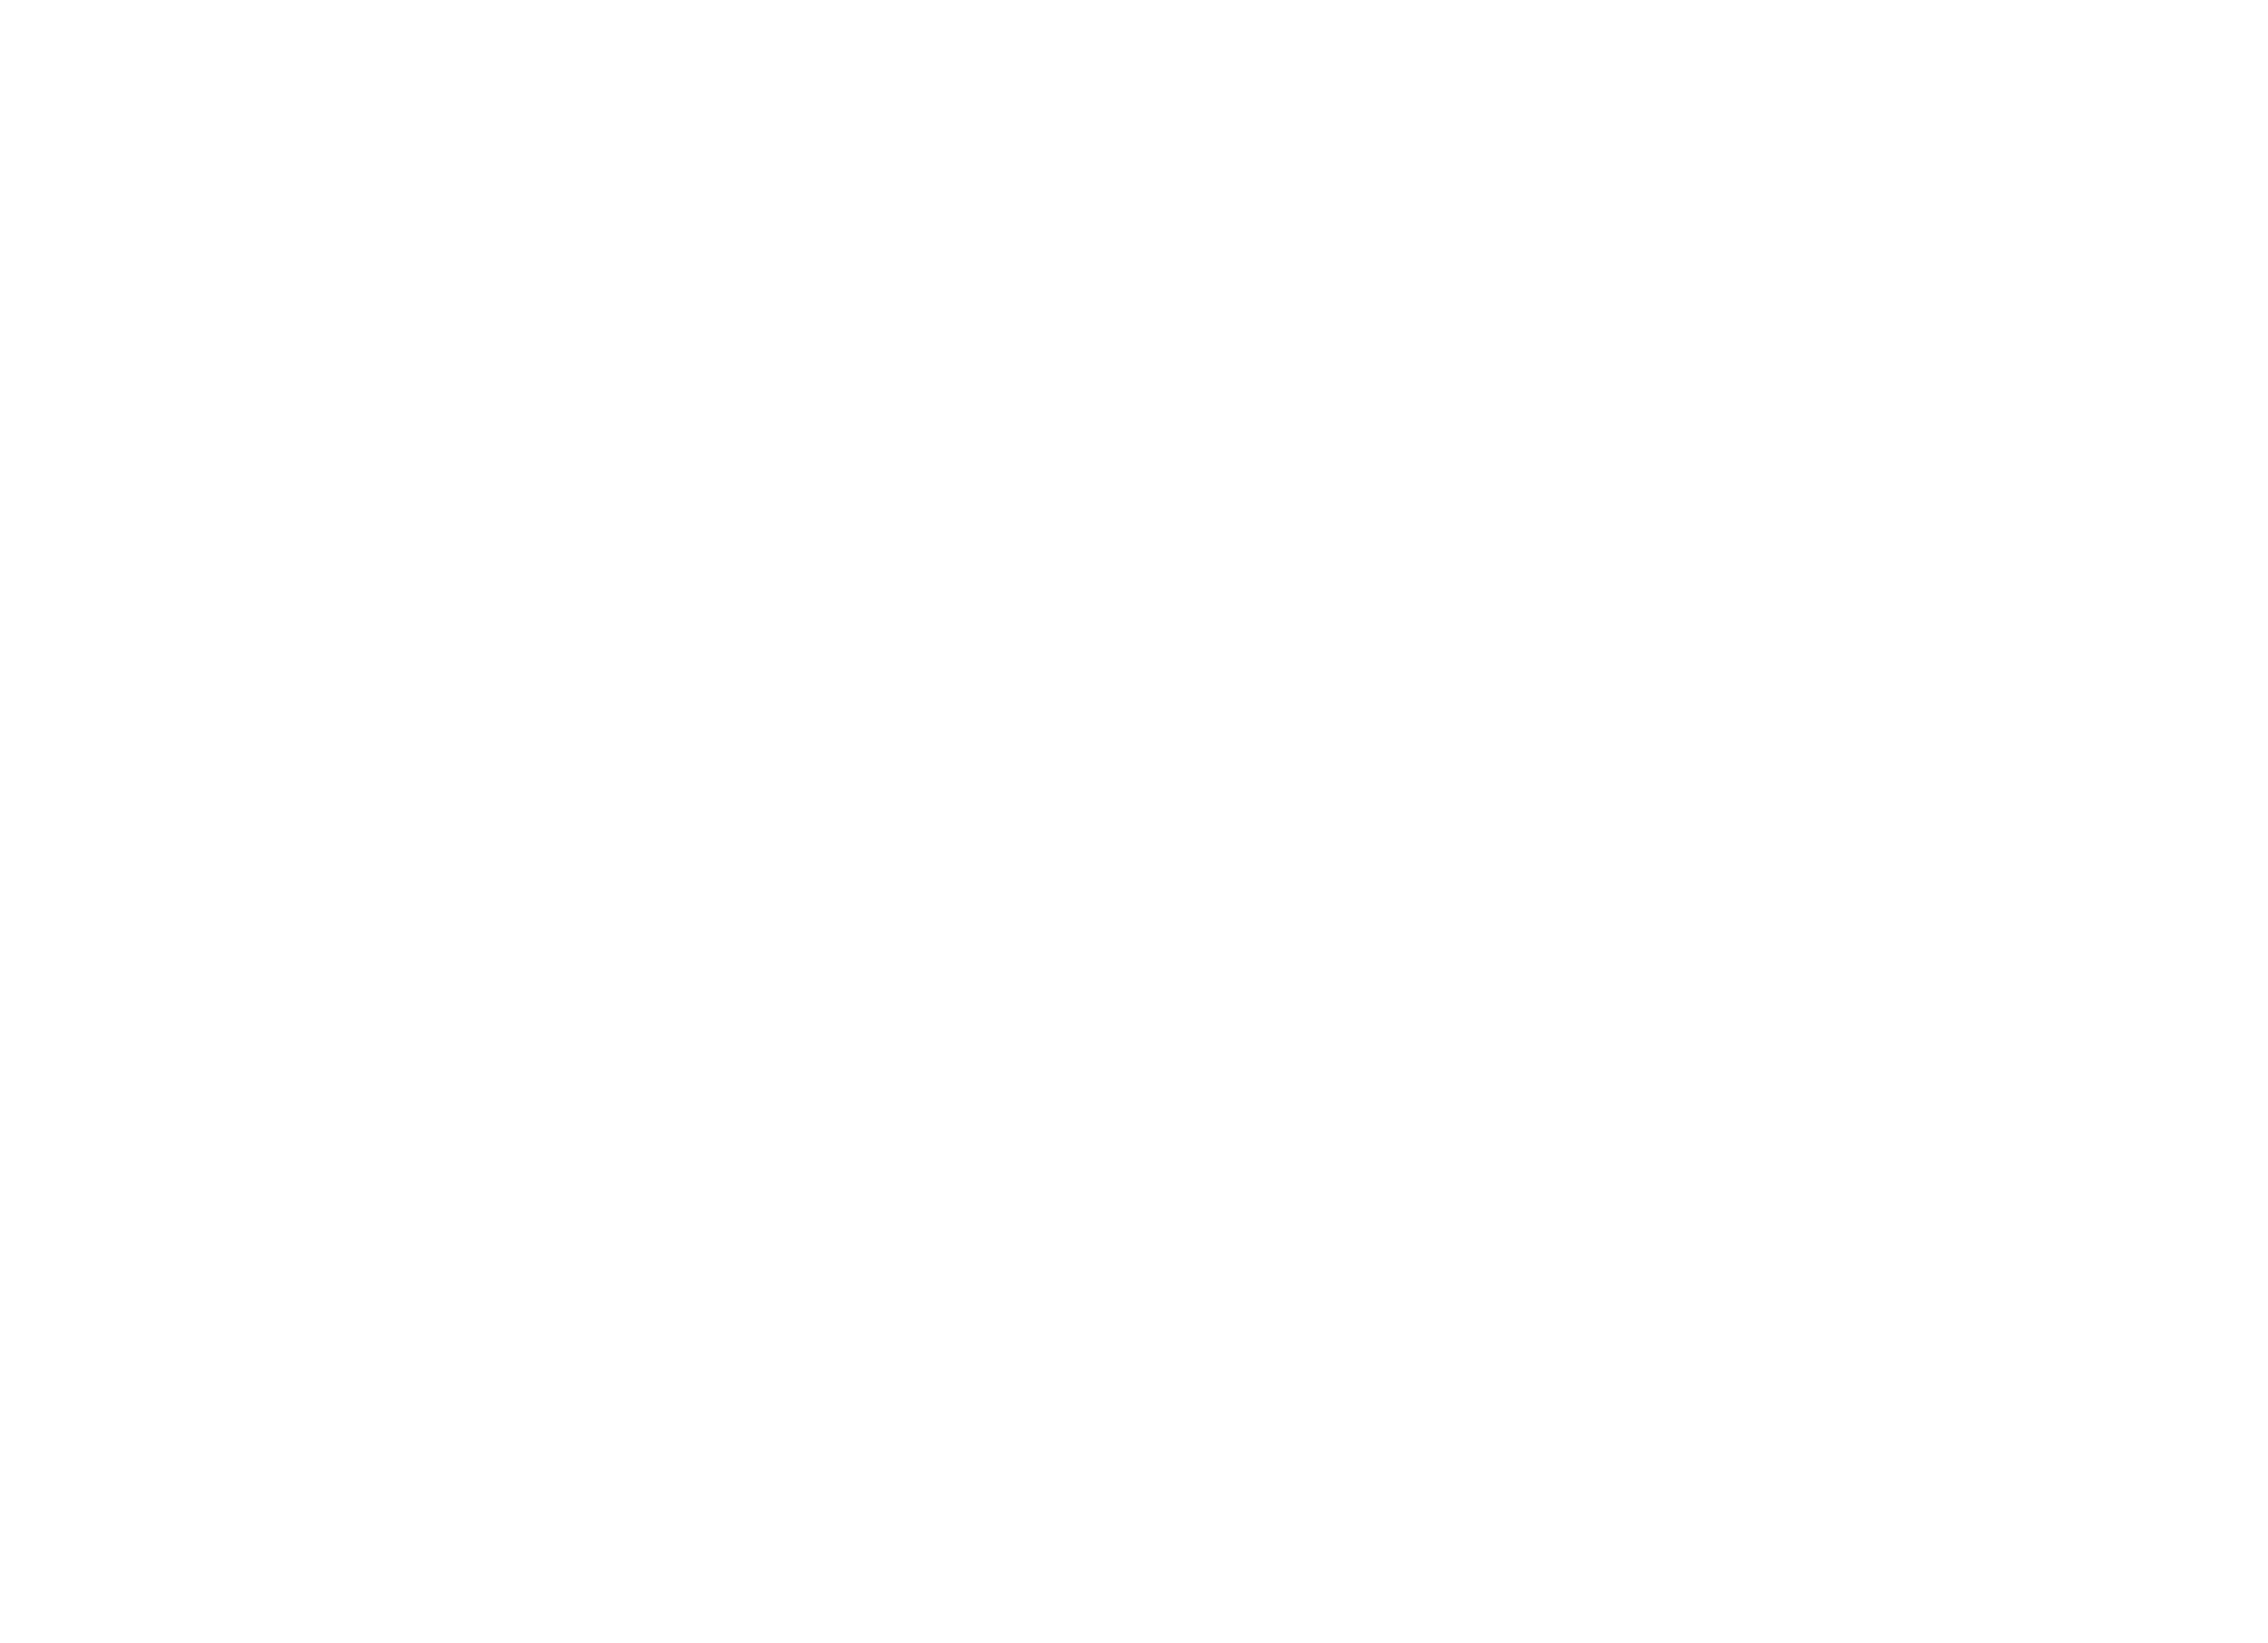 Elite Equine Mobile Dentistry, PLLC